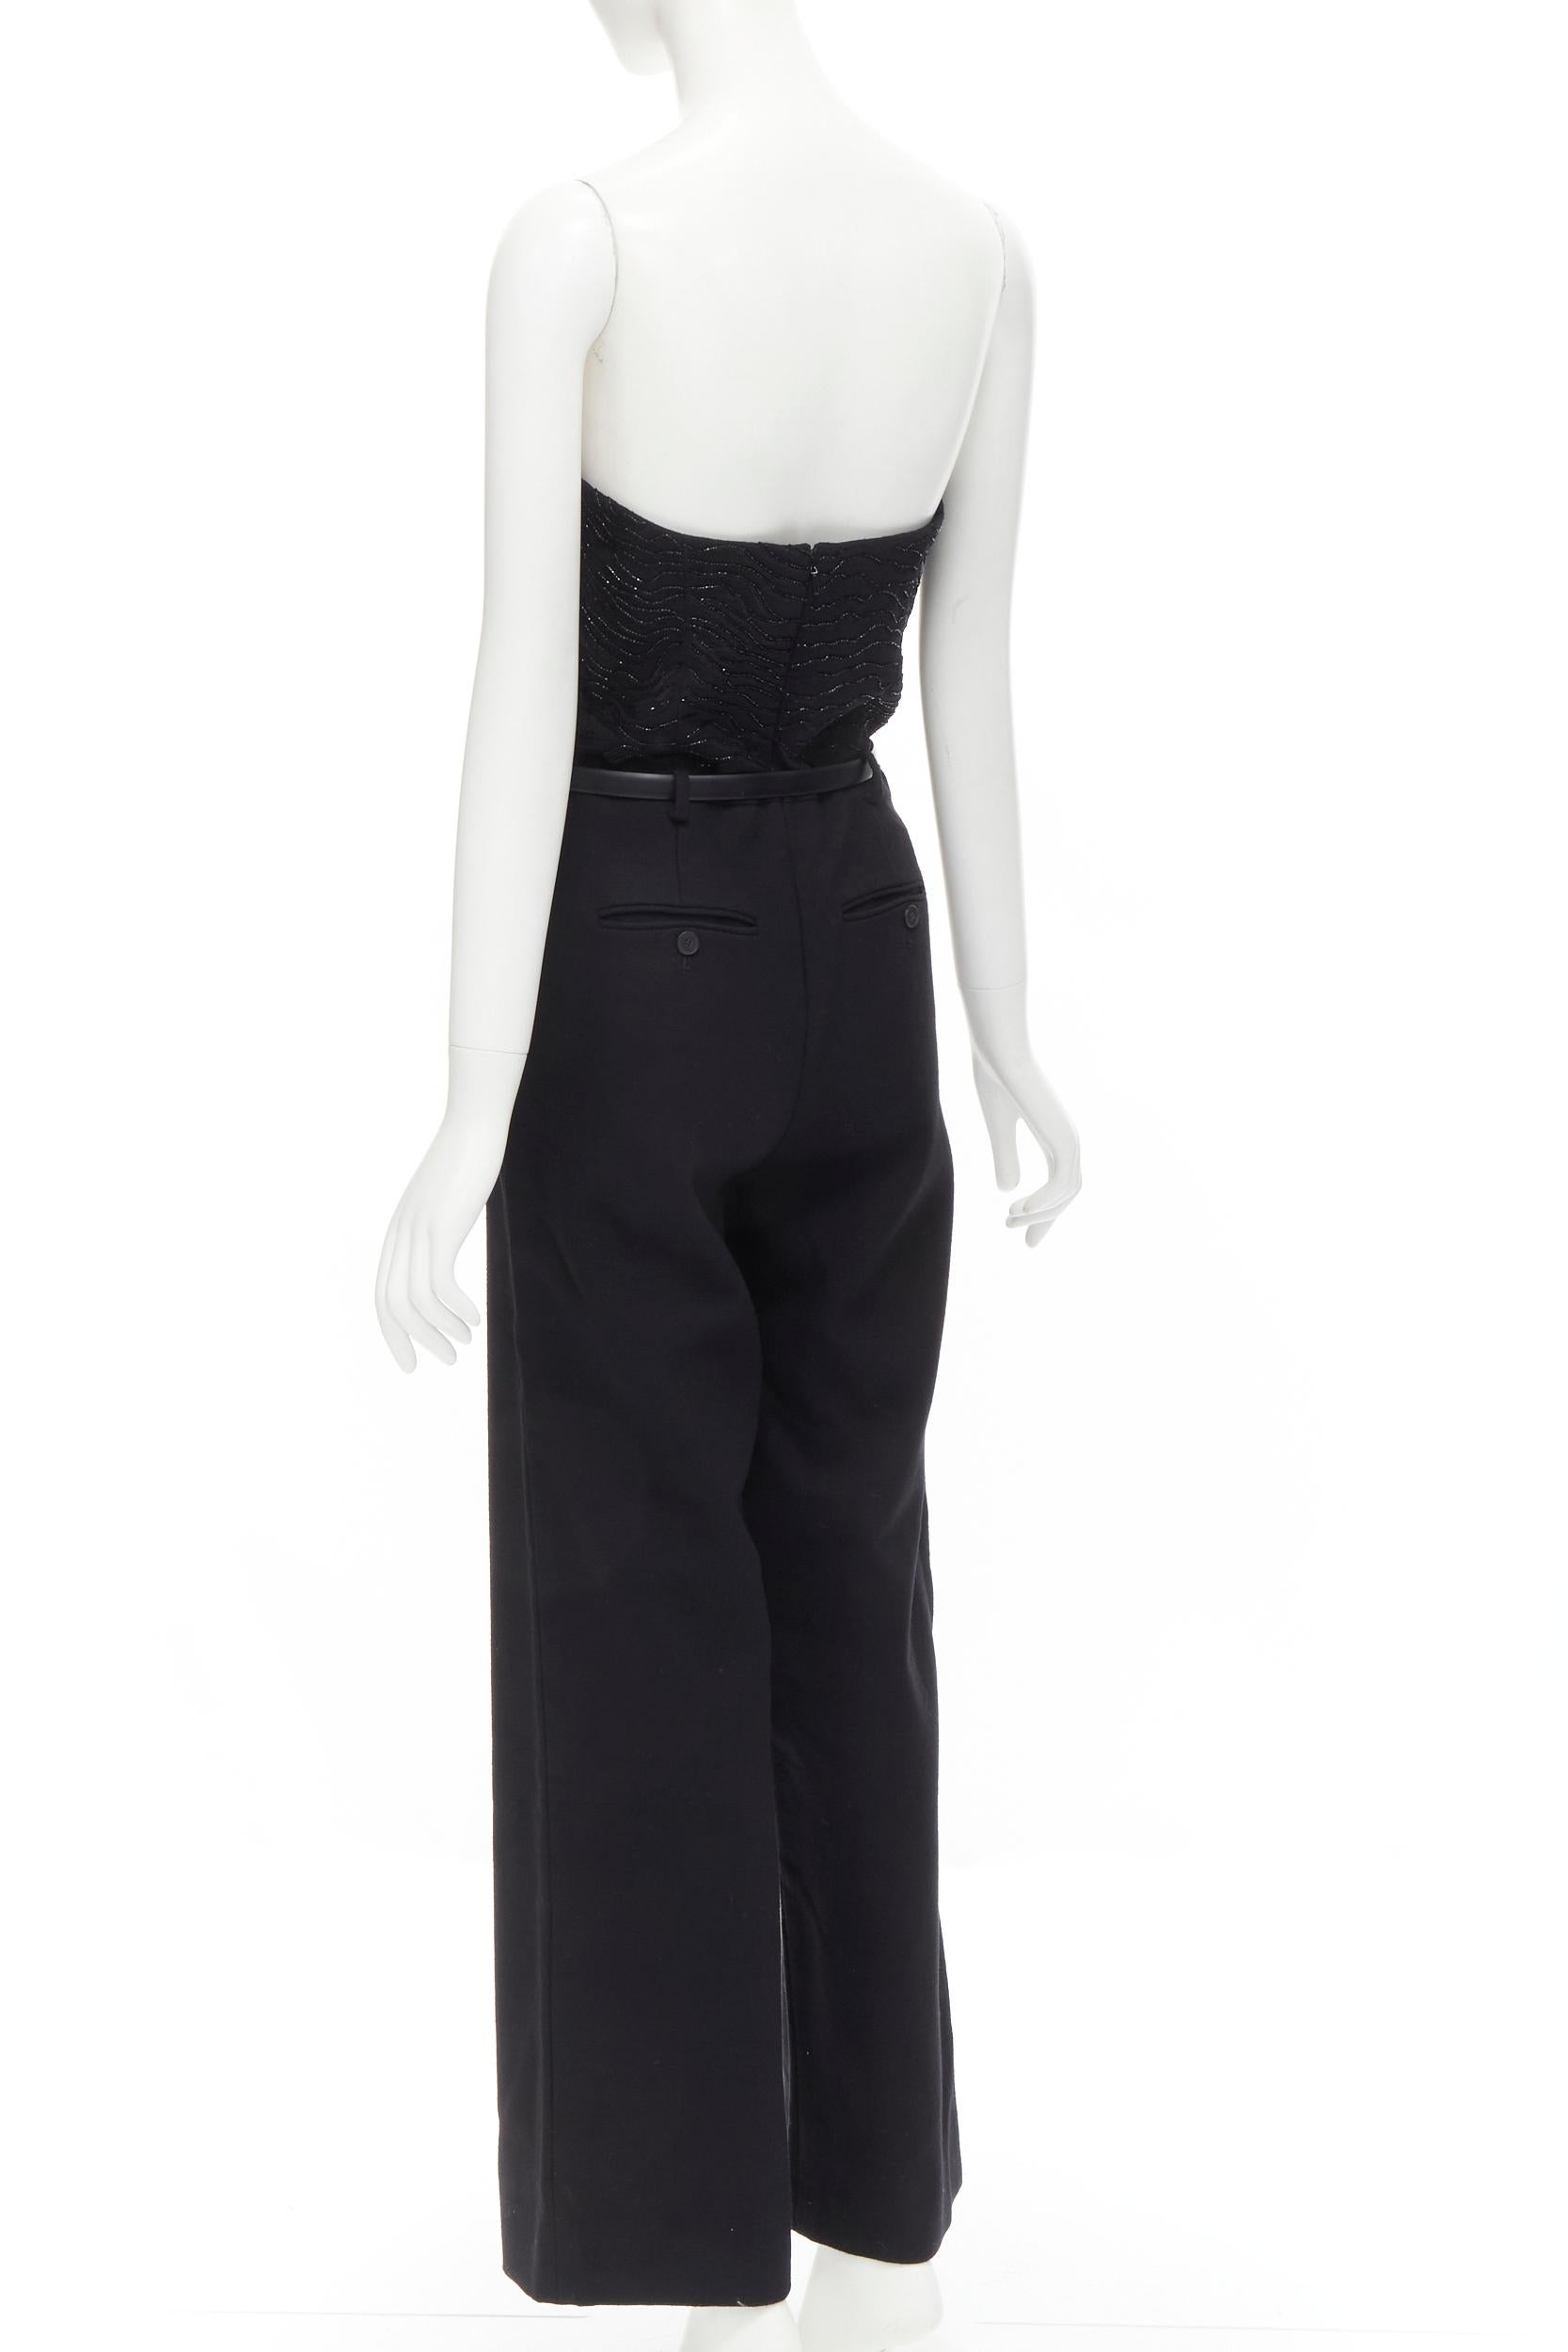 Black JASON WU 2014 Runway black bead embellished boned corset belted jumpsuit US2 XS